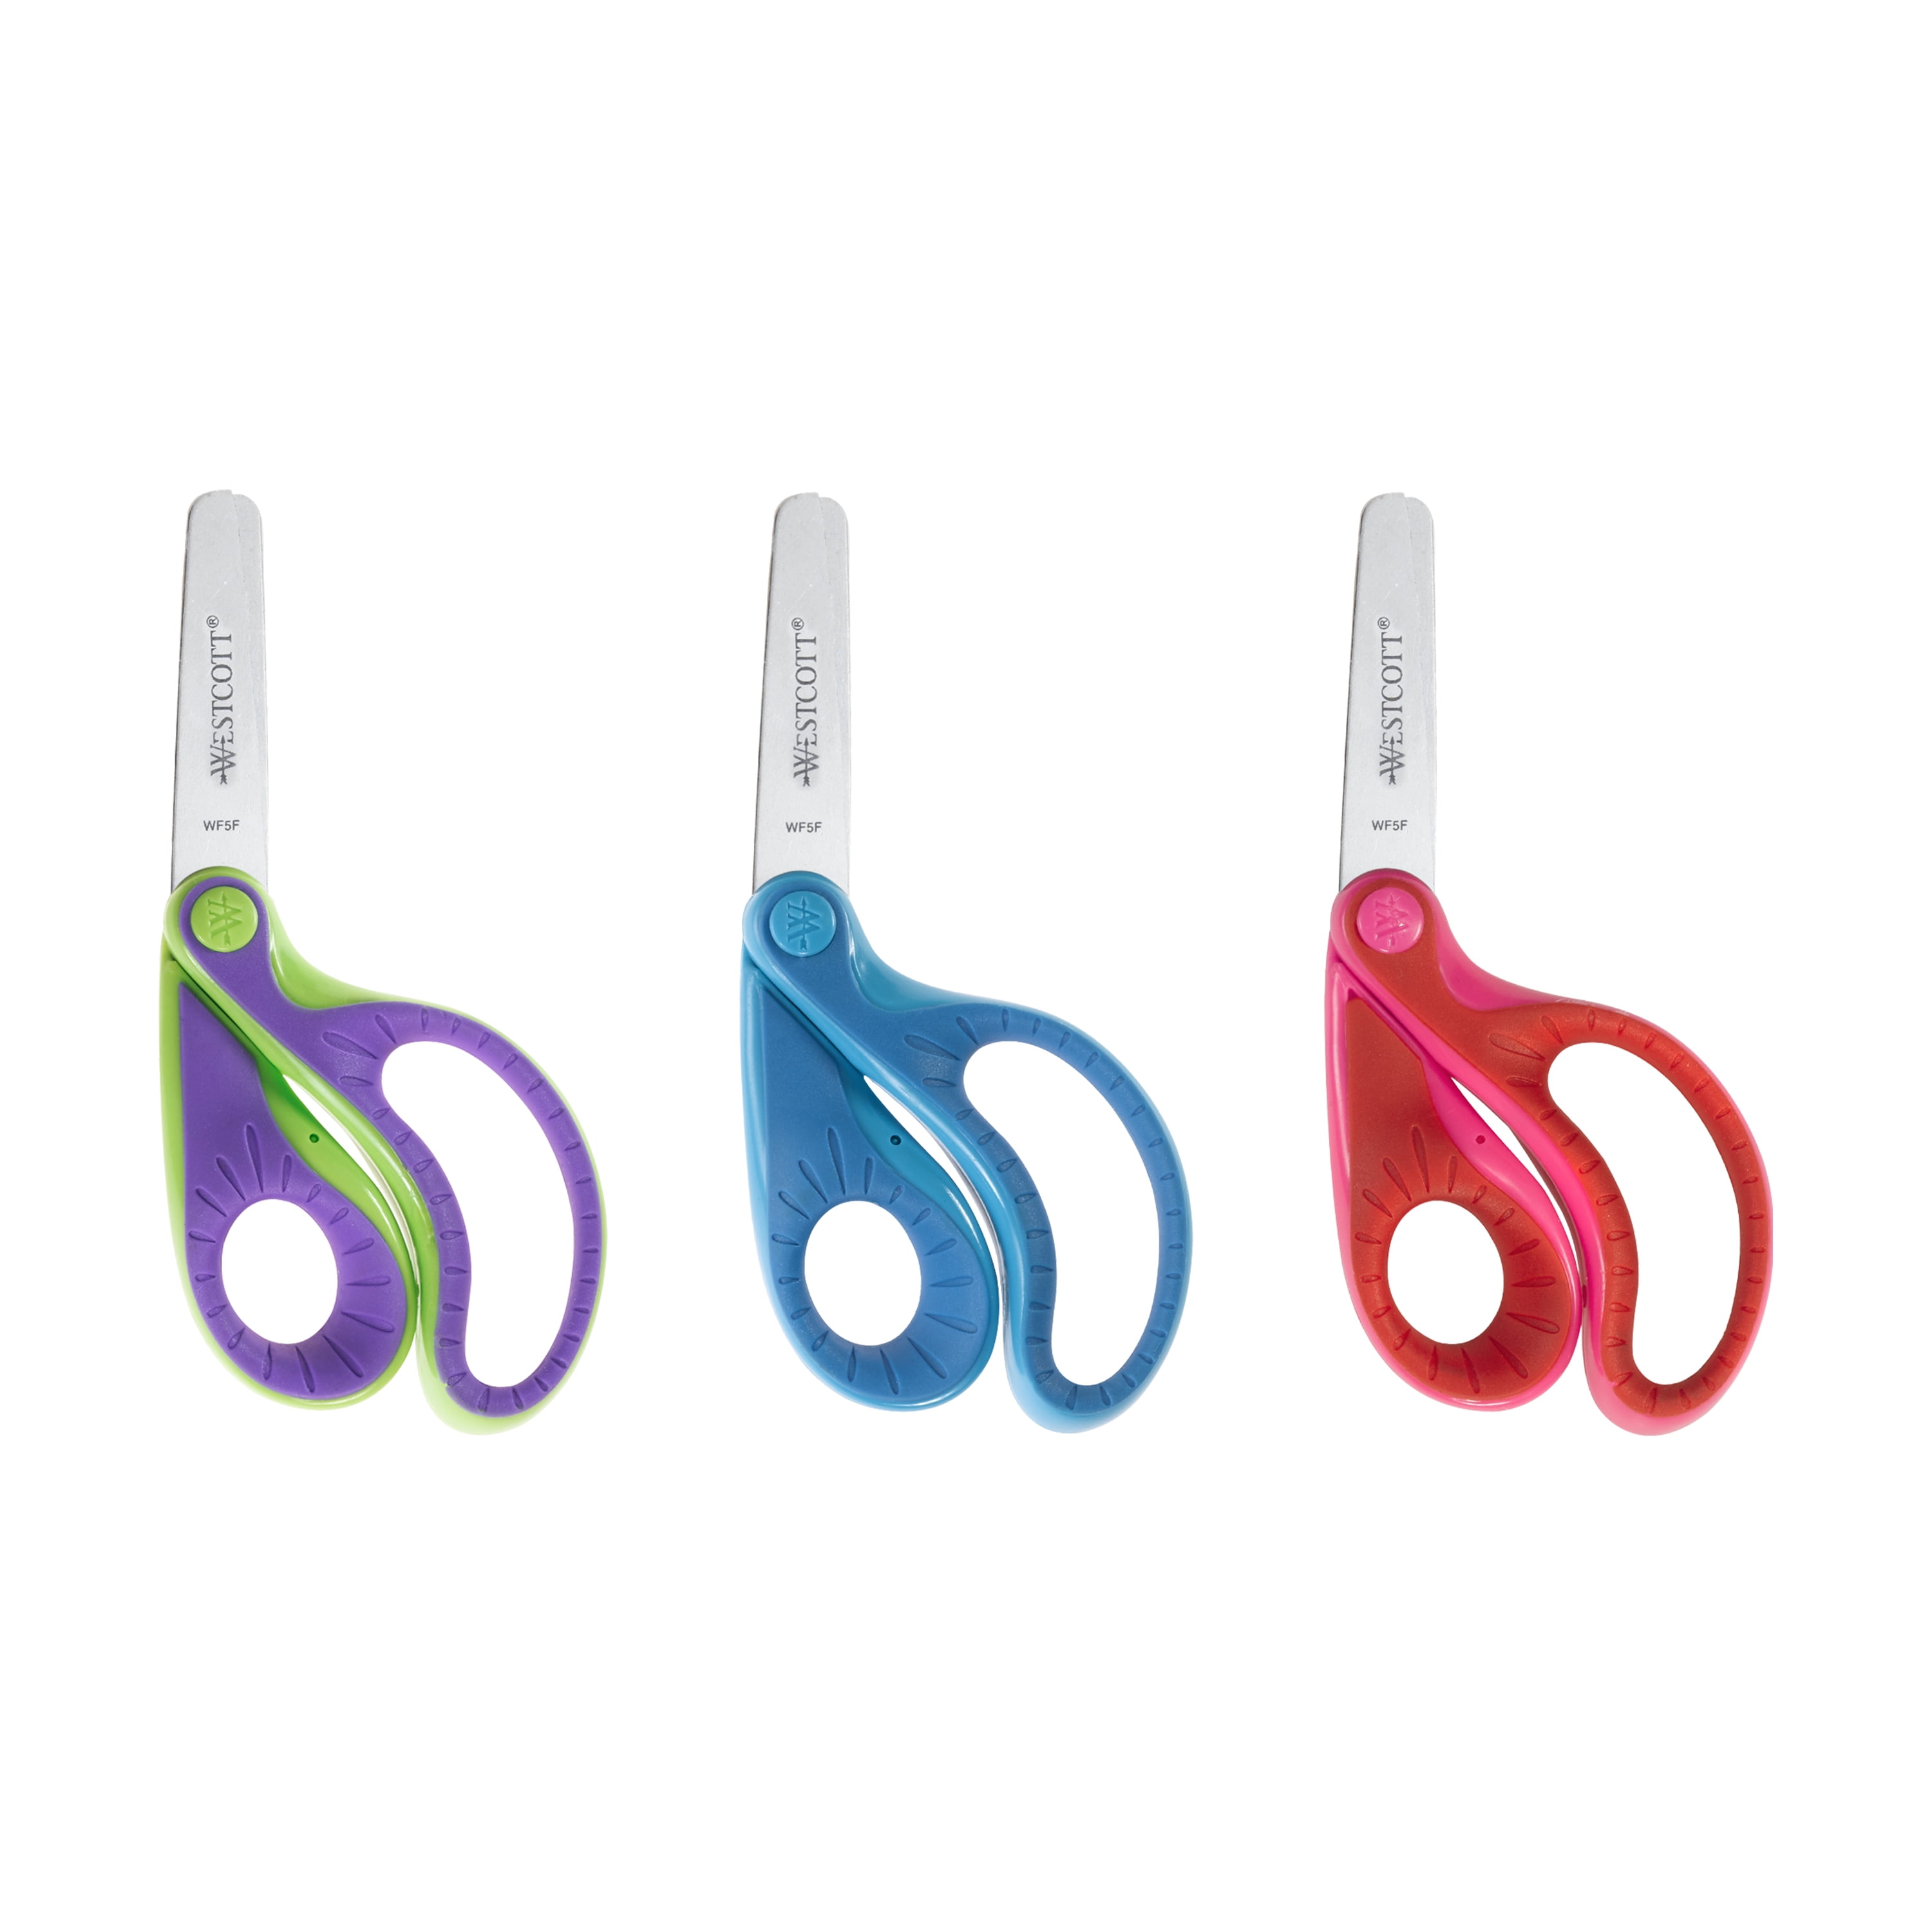 Westcott® School Left-Handed Kids Scissors, Assorted Colors, 5 Pointed,  Pack of 6